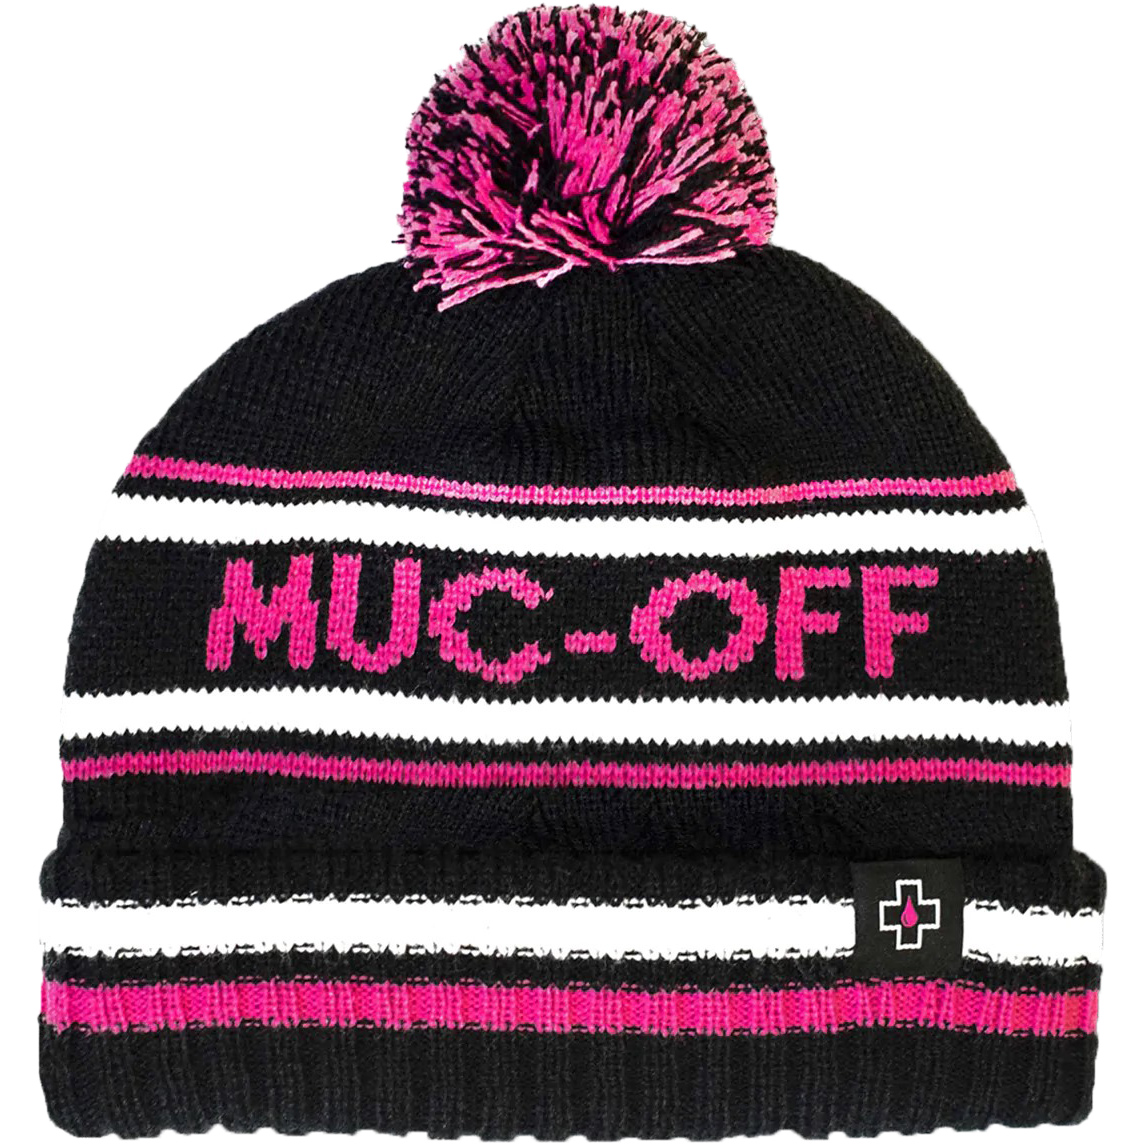 Productfoto van Muc-Off Bubble Hat - pink/black